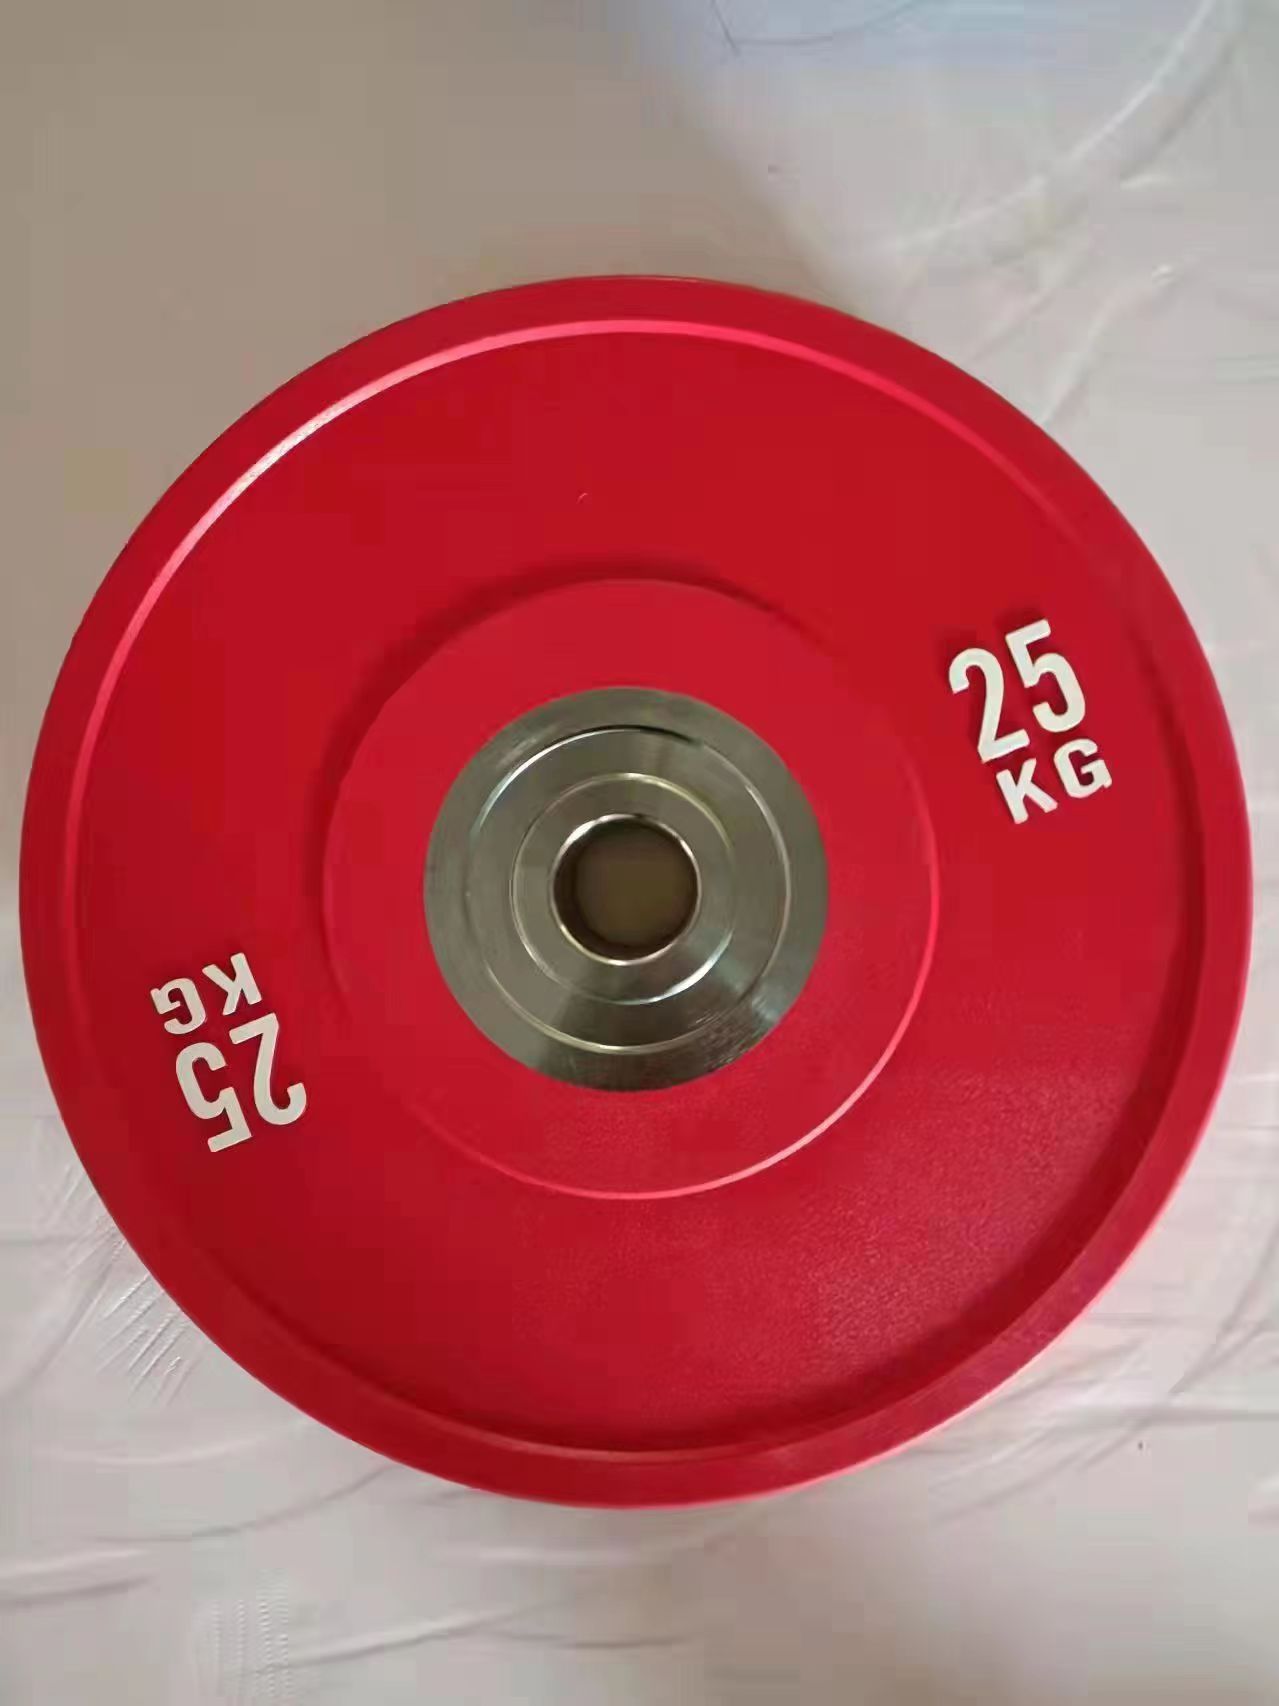 vægtløftning stål lbs kgs konkurrence kofanger plade